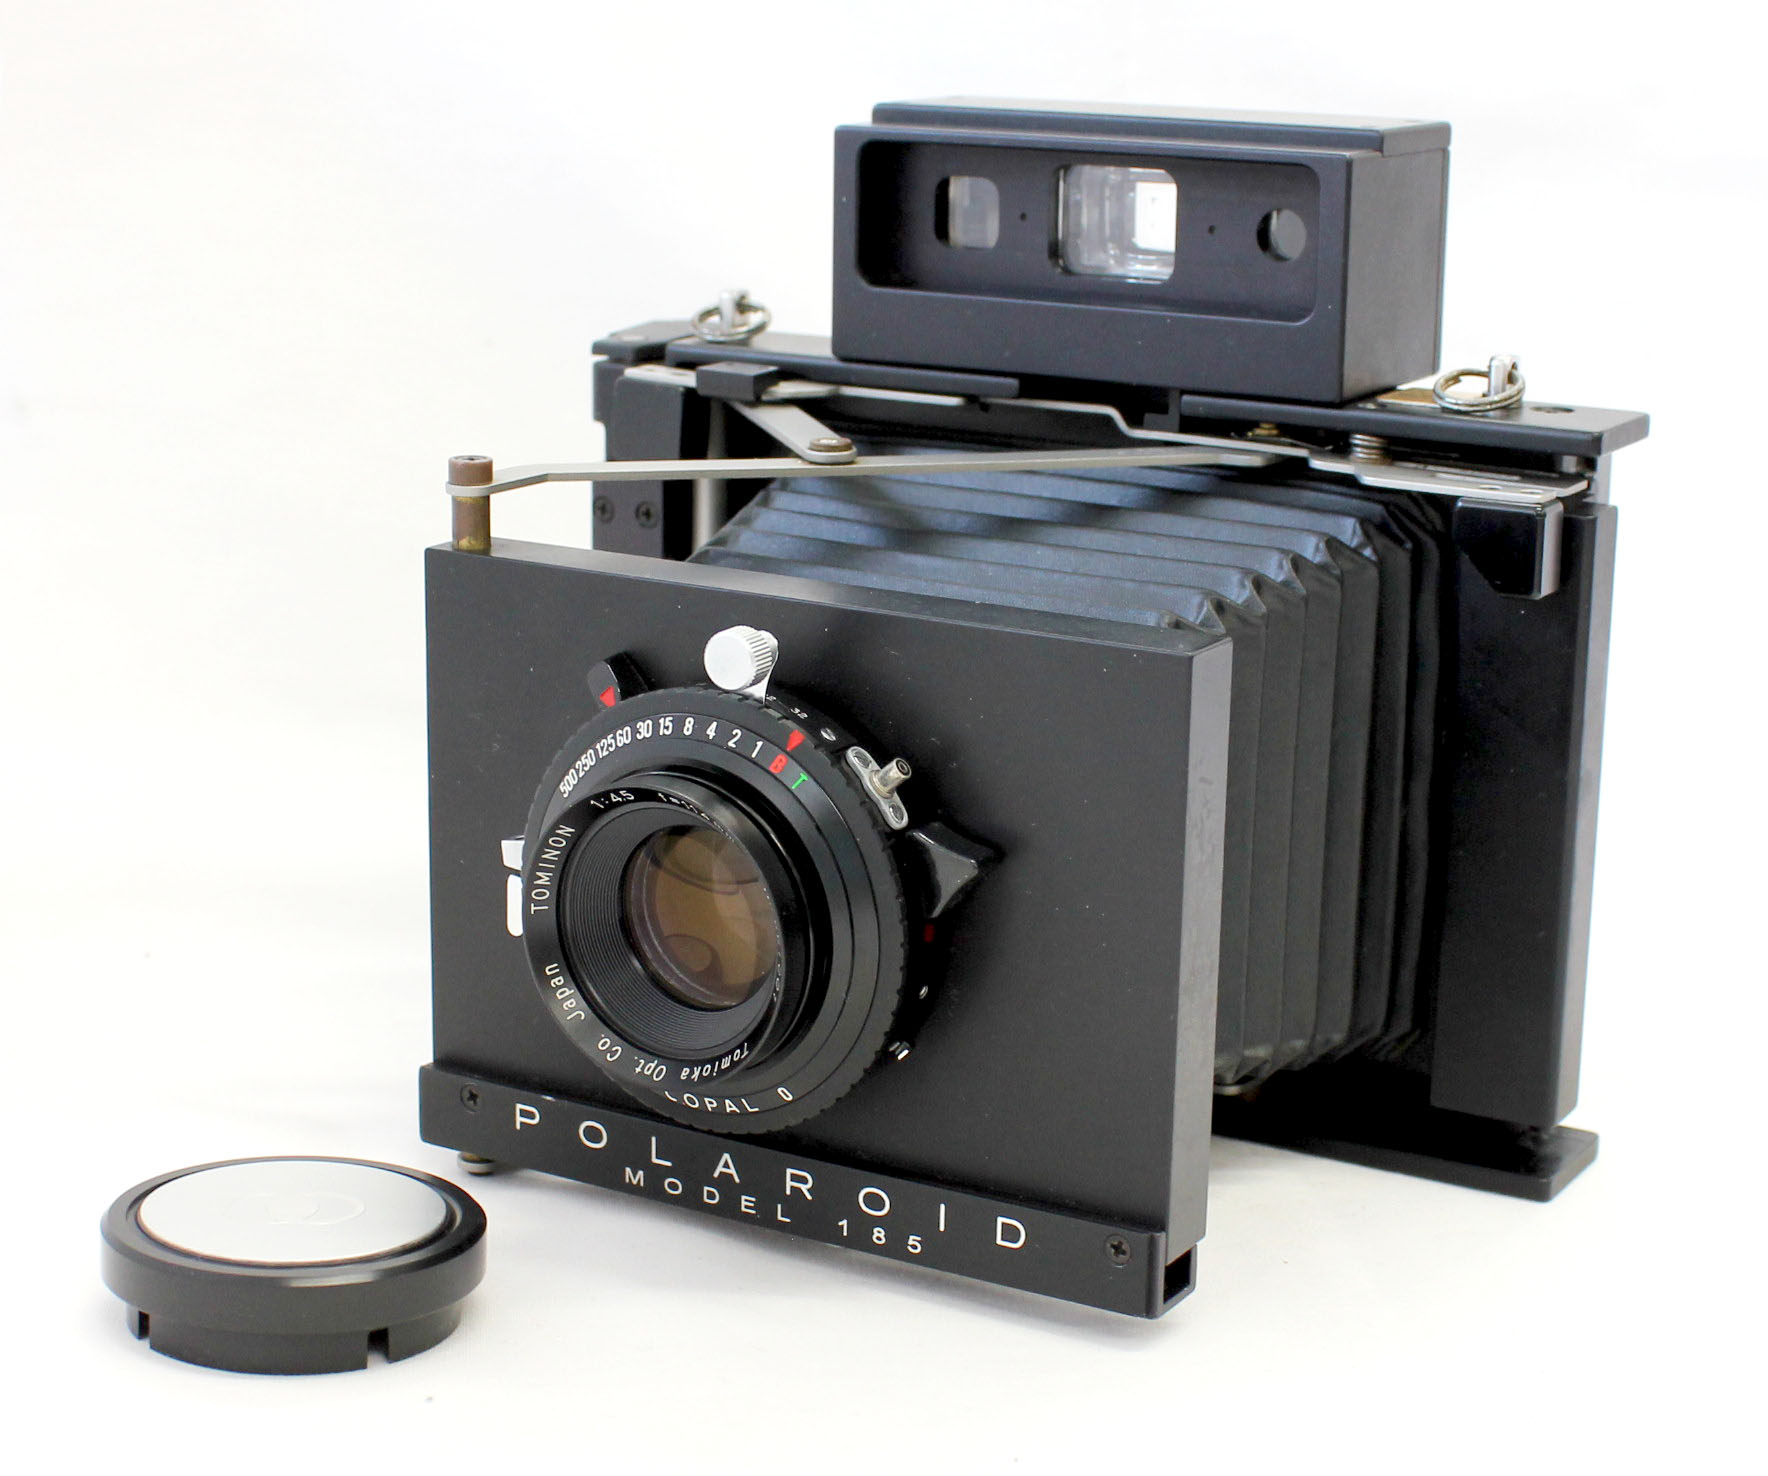  Polaroid Land Camera Model 185 Millennium (2000) Japan Limited Model w/ Tominon 114mm F/4.5 Photo 0